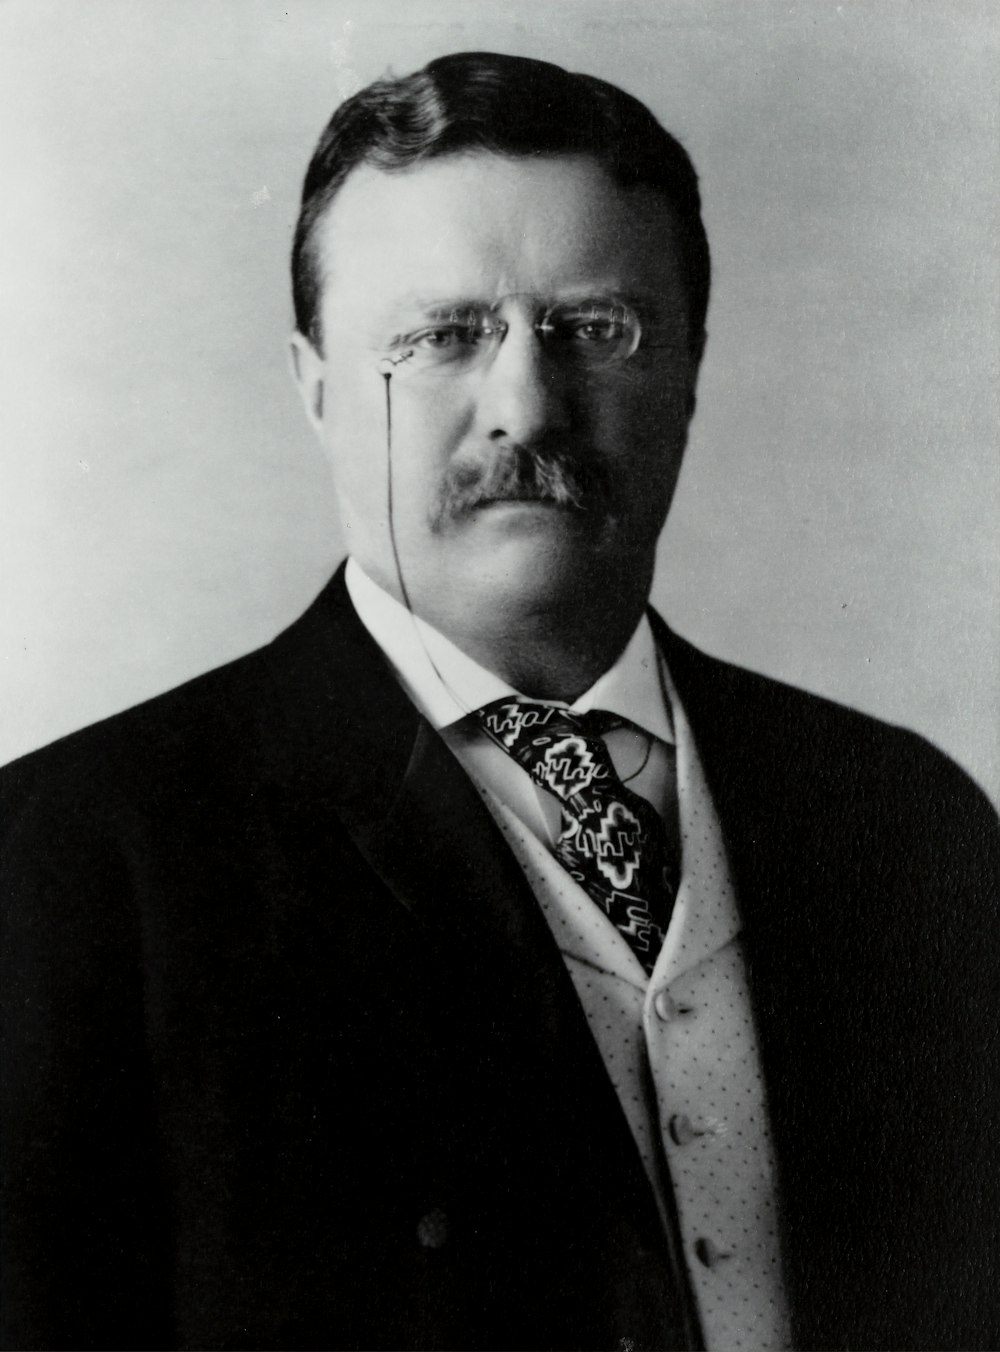 President Theodore Roosevelt